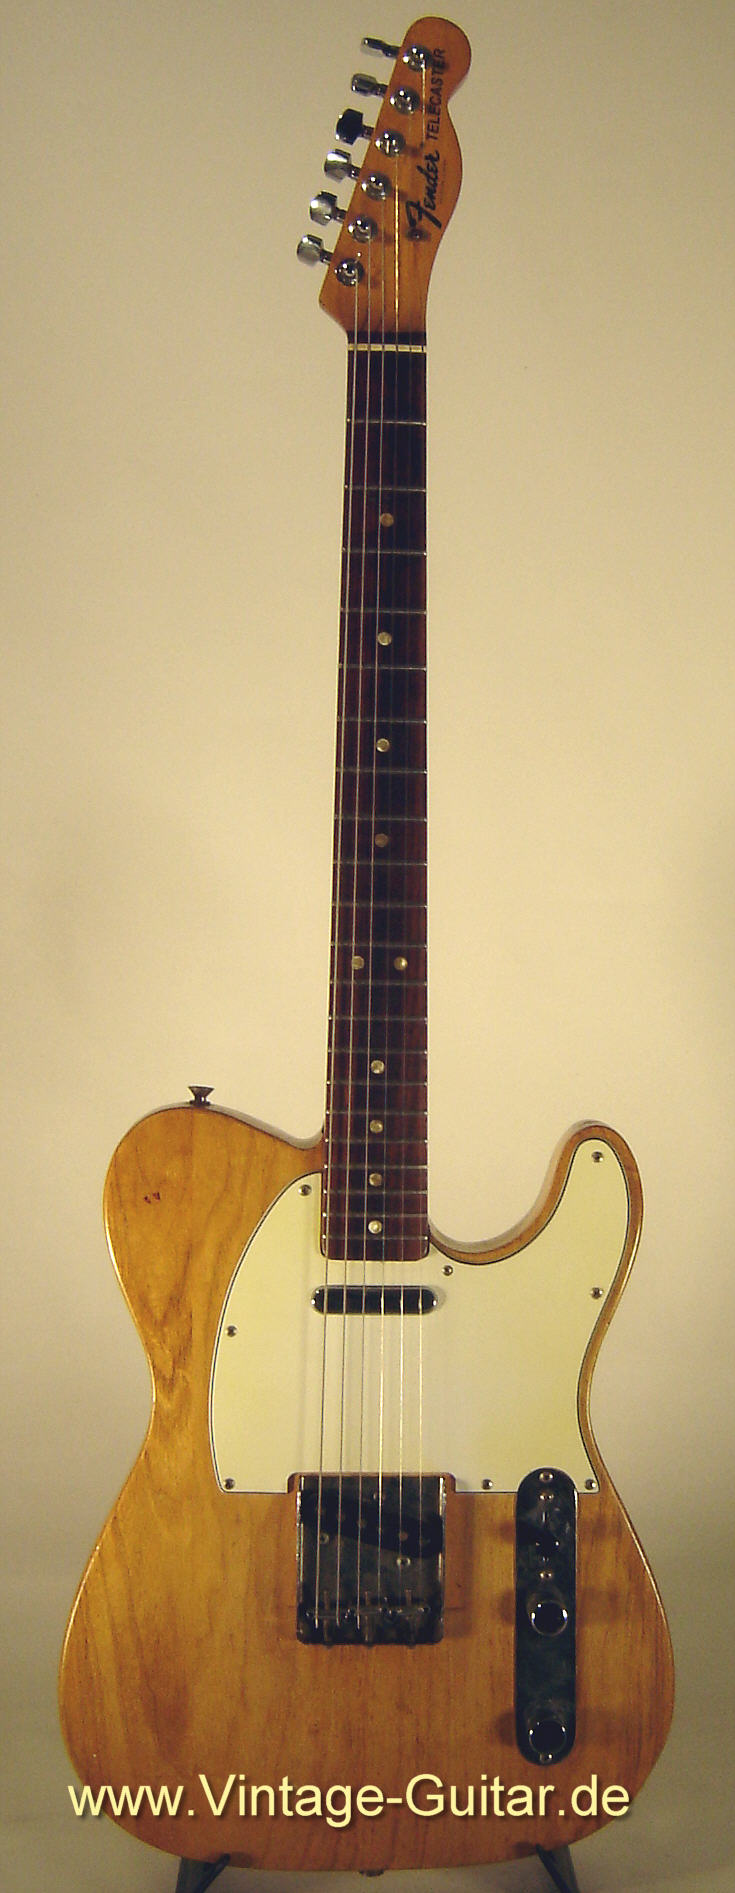 Fender-Telecaster-1967-refinished.jpg